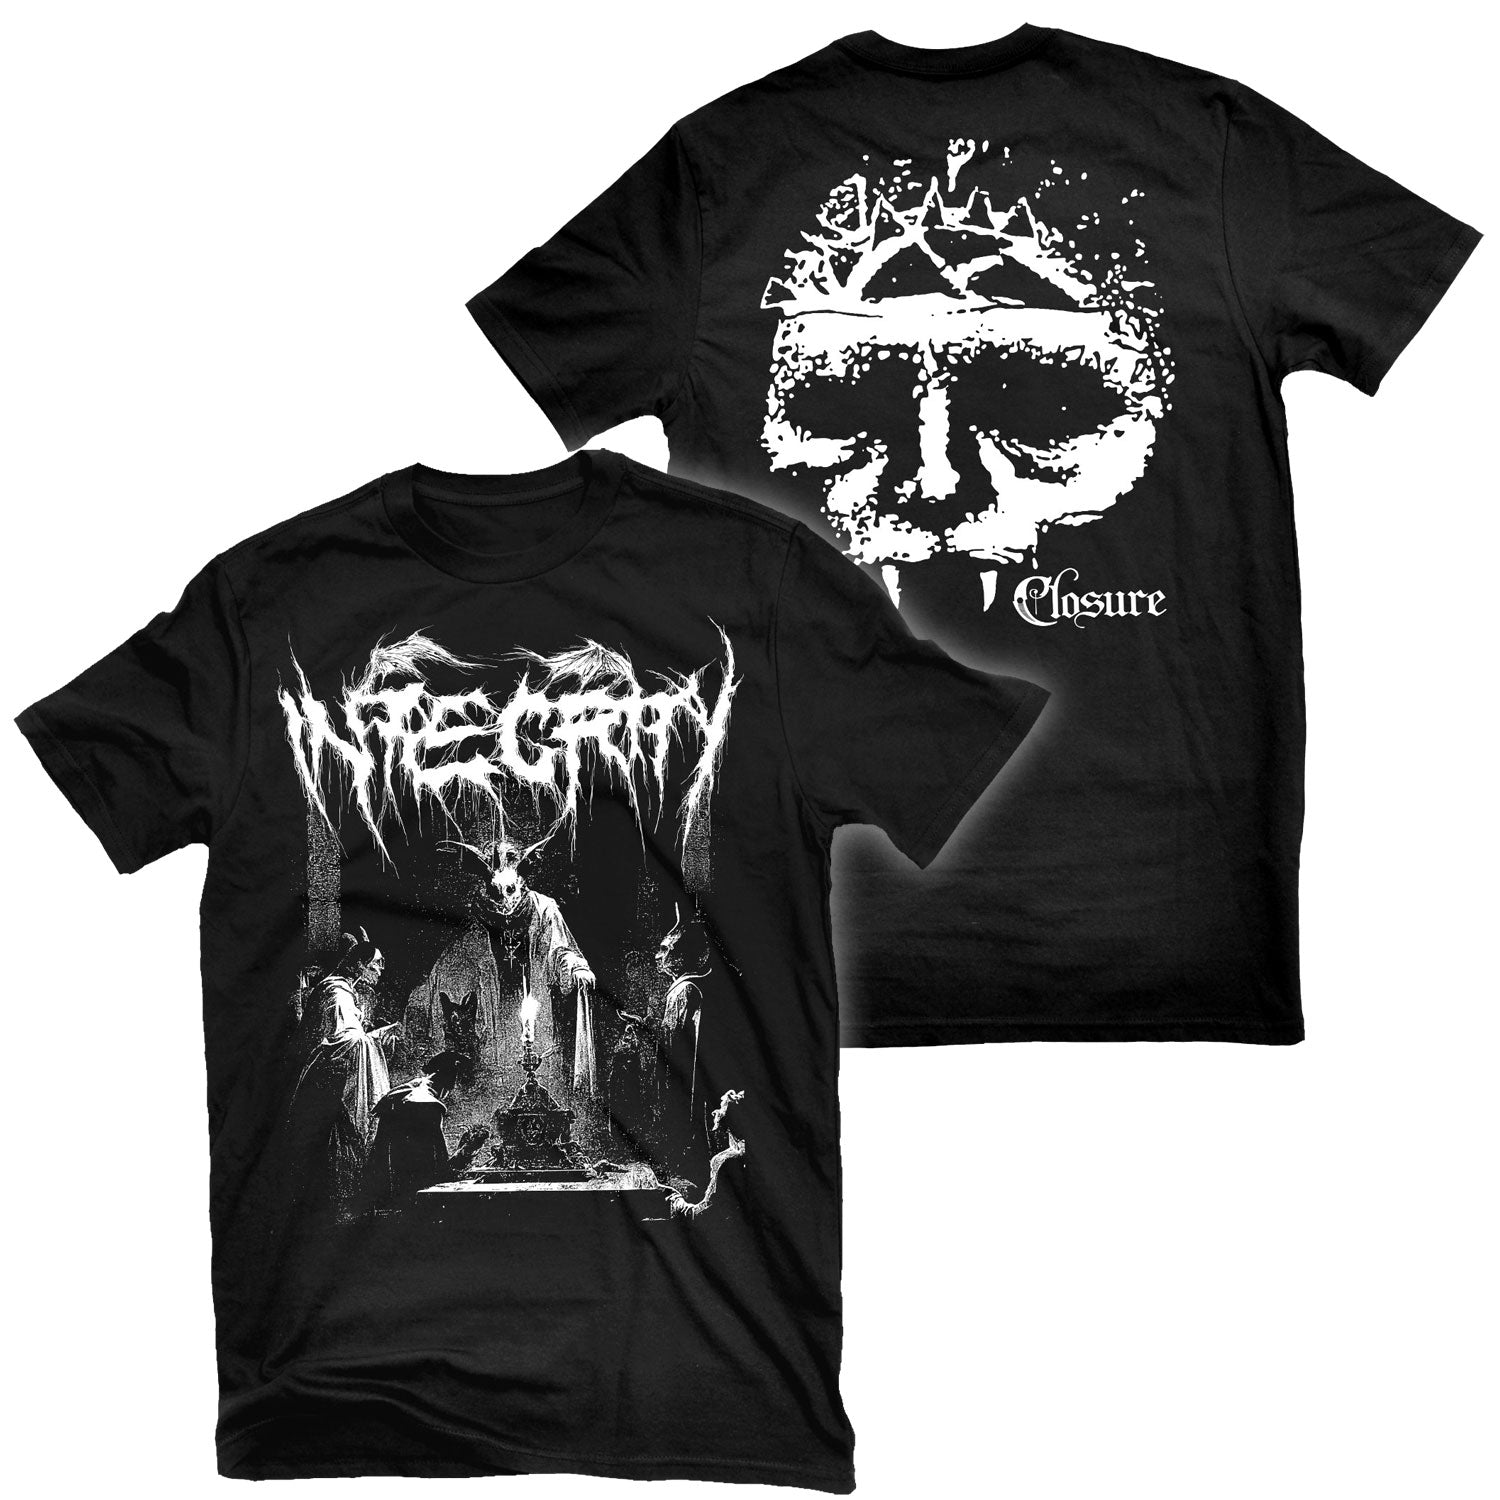 Integrity "Closure (Reissue)" T-Shirt